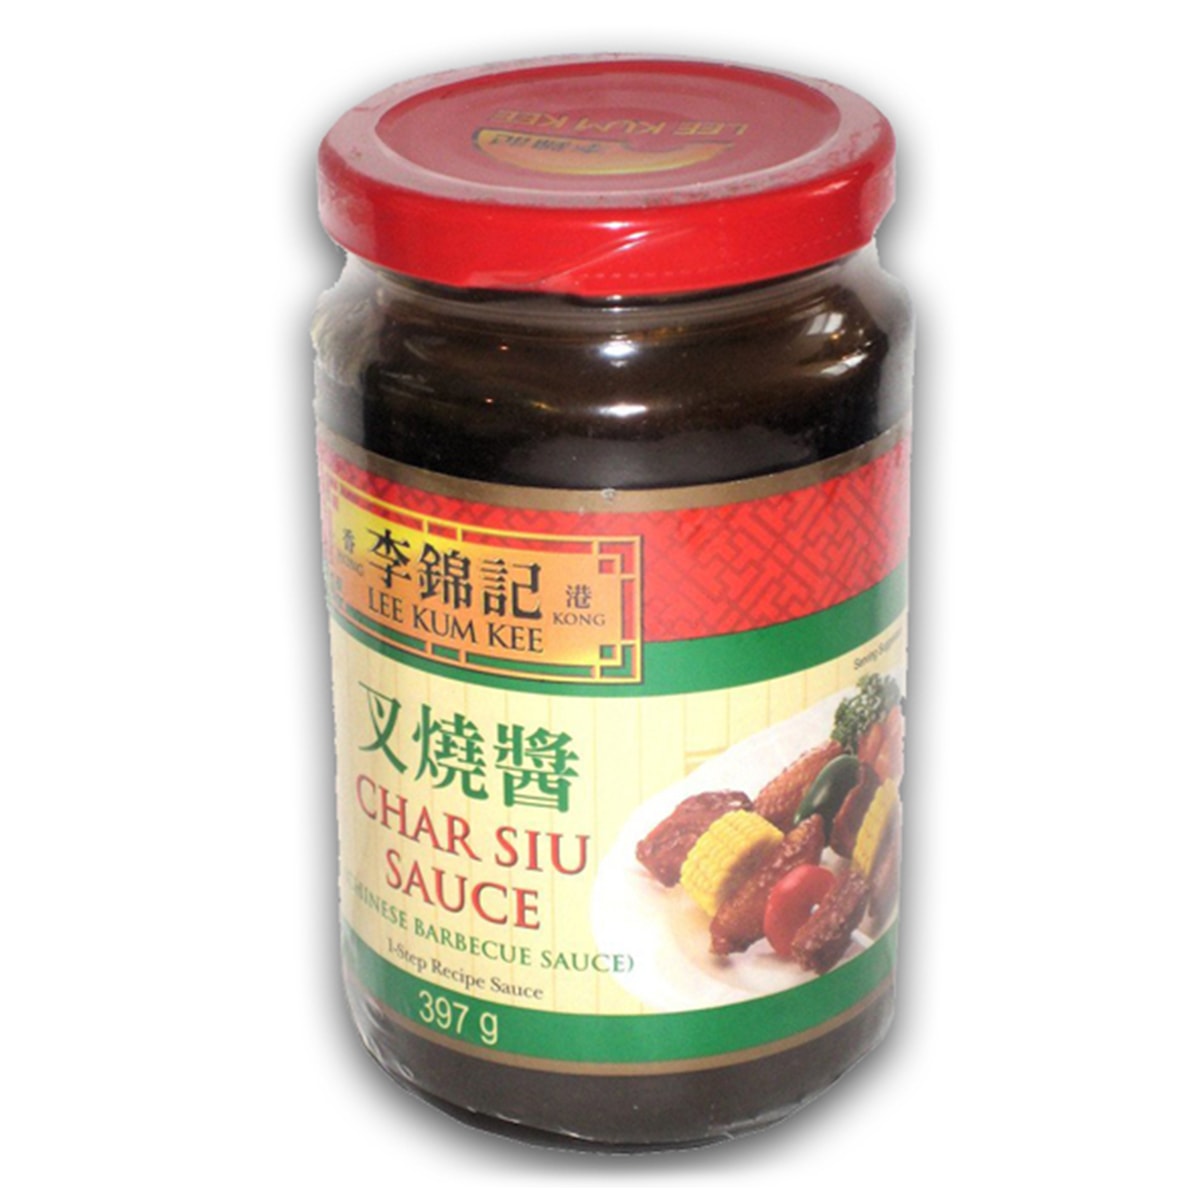 Buy Lee Kum Kee Char Siu Sauce (Chinese Barbecue Sauce) - 397 gm